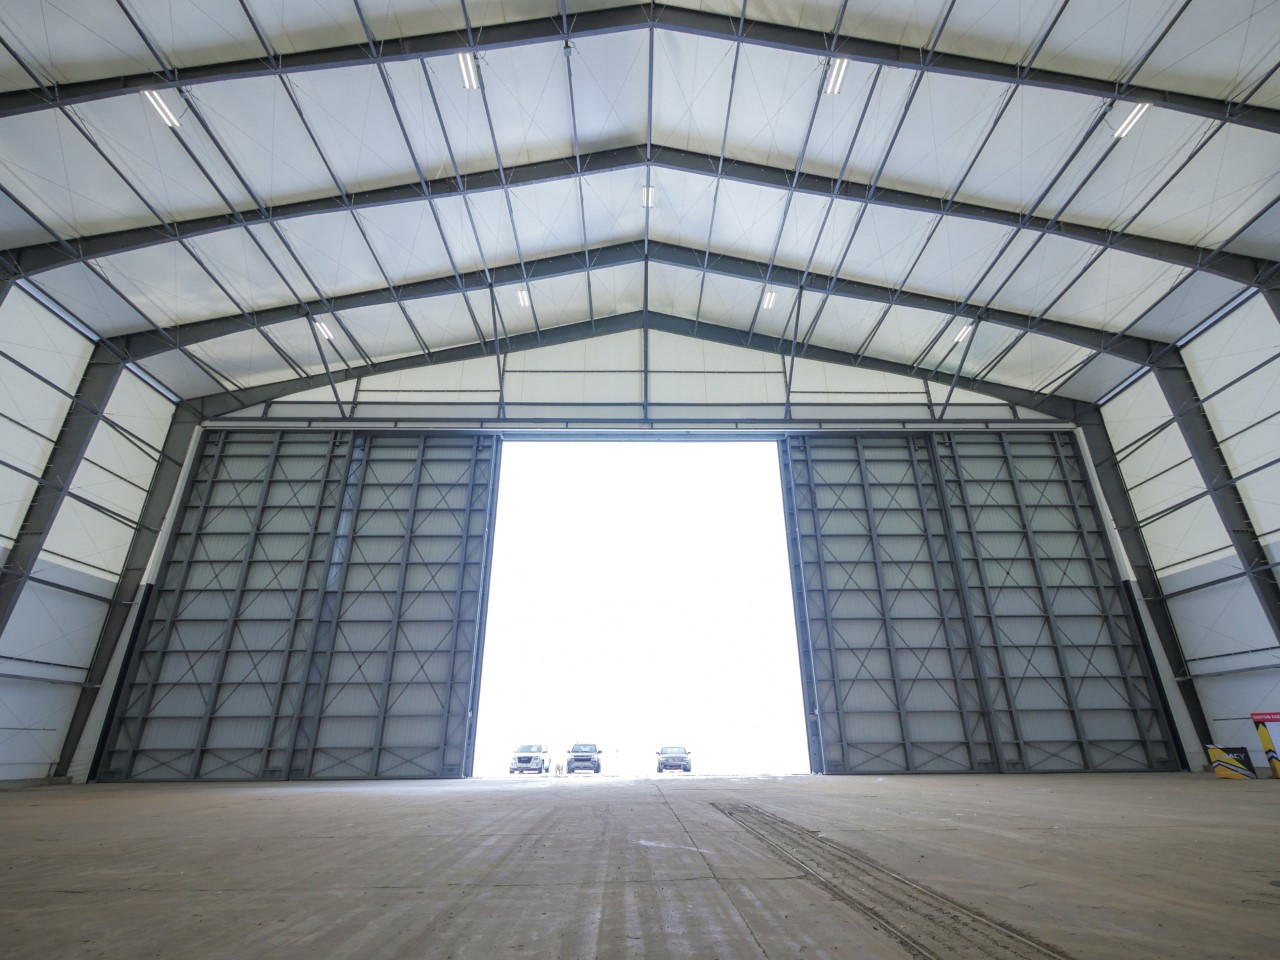 Similar Hangar design to be built at UAV Corp's Airport